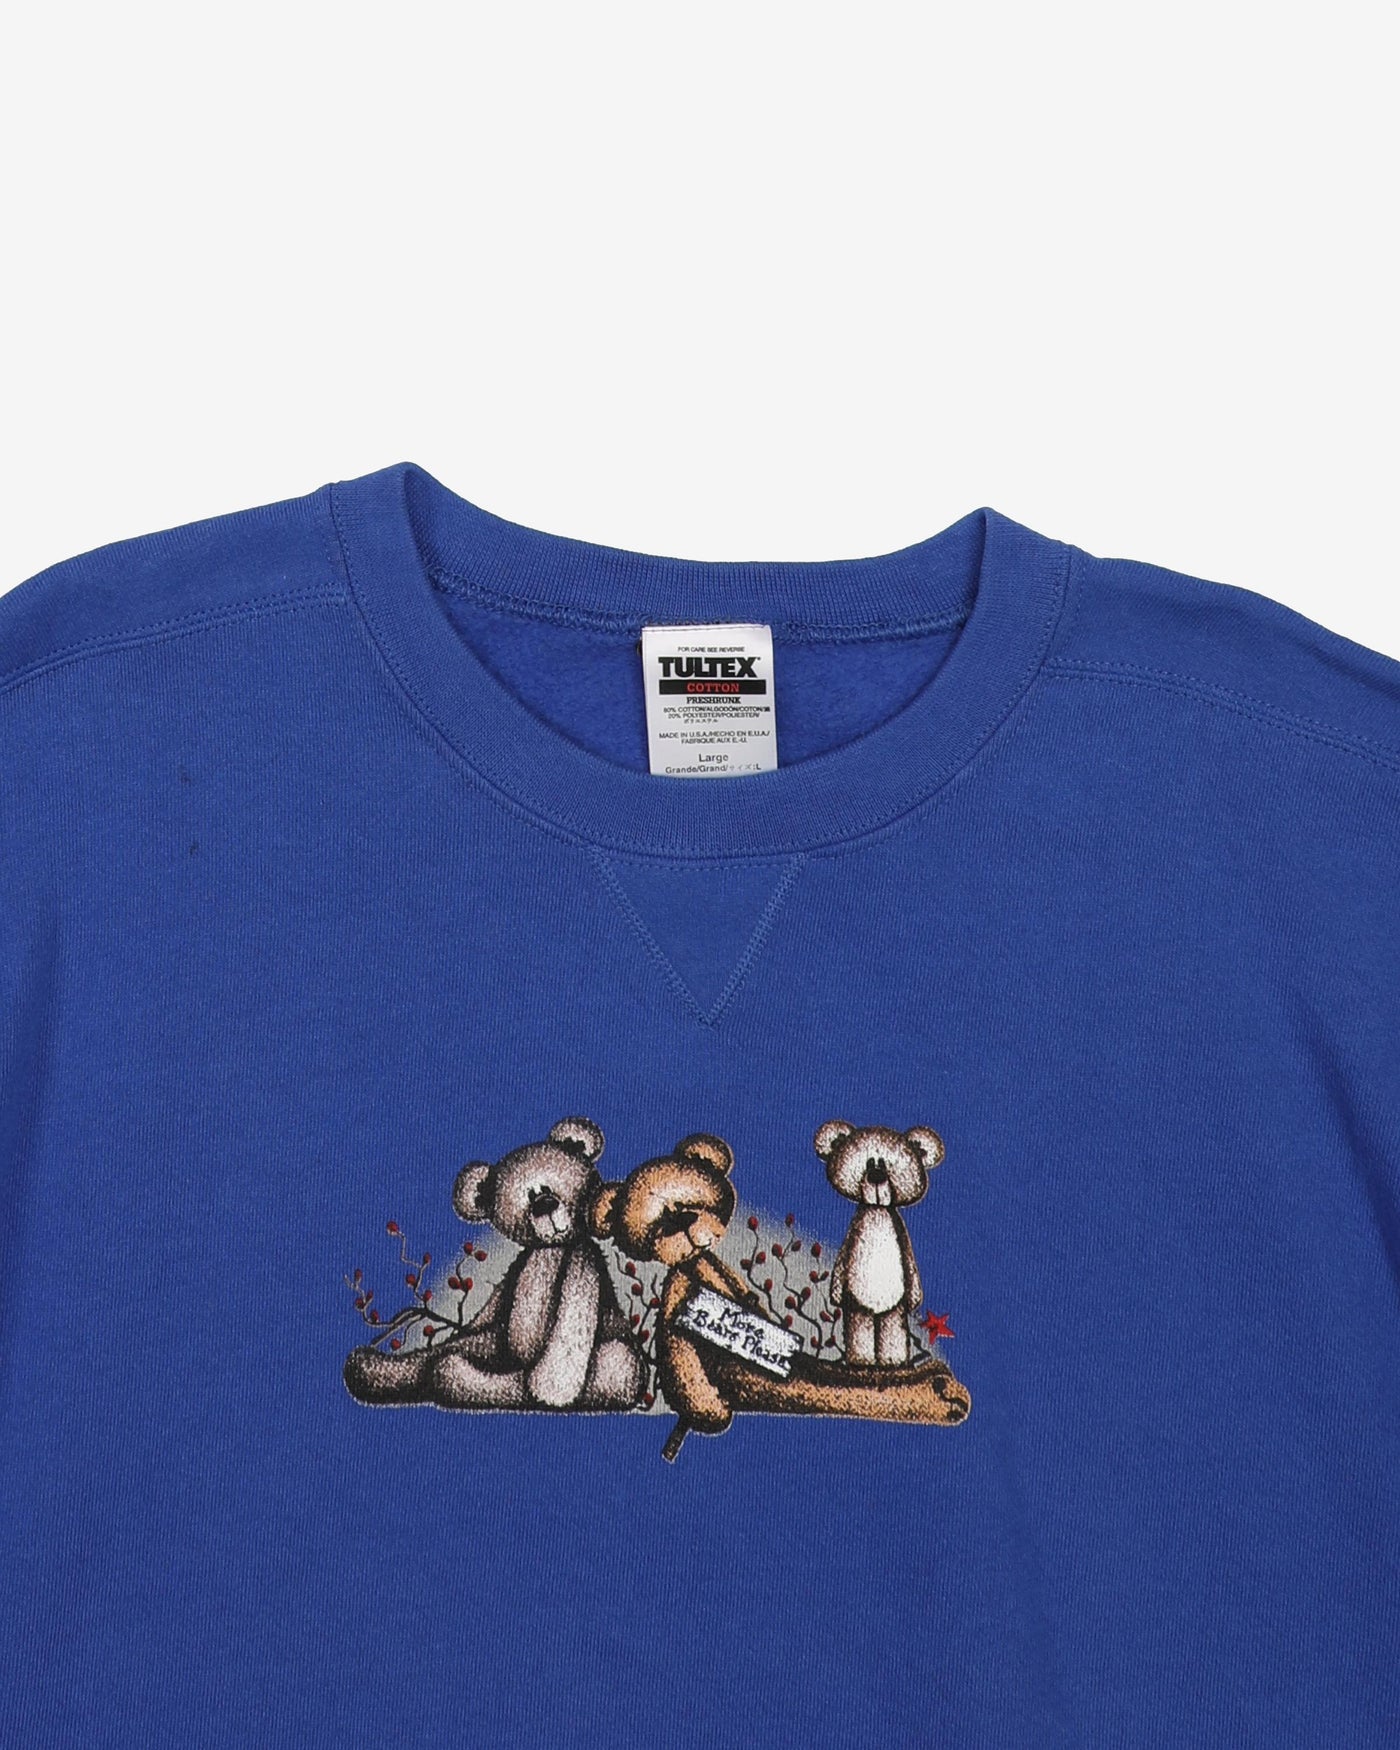 Vintage 90s More Bears Please Royal Blue Tultex Sweatshirt - L